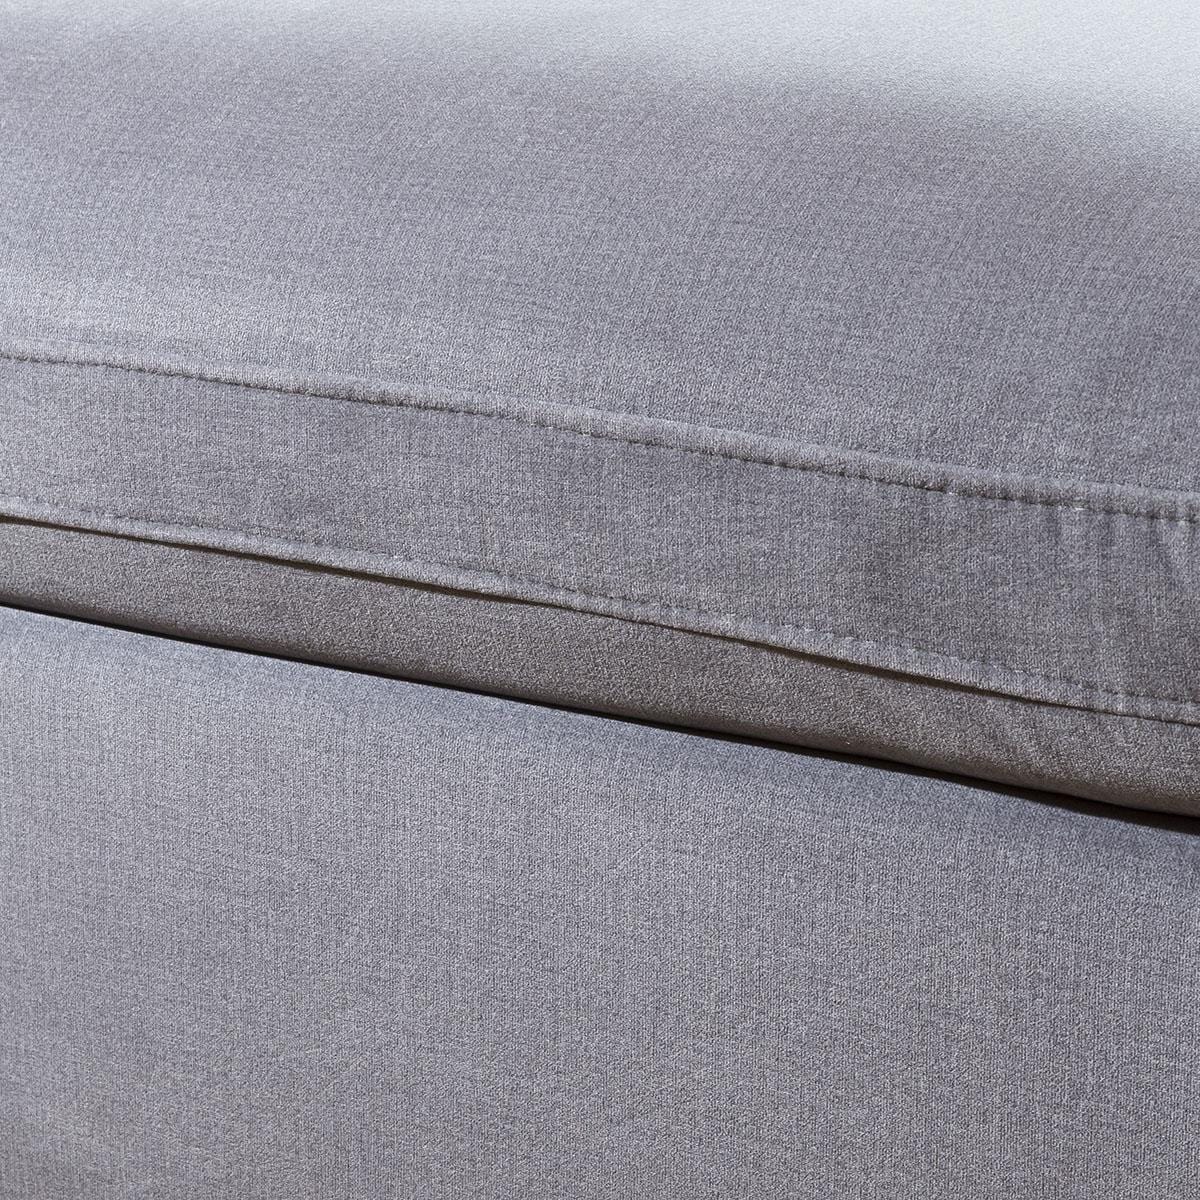 Quatropi Massive Modern Mikey Sofa Medium Grey U Shape Corner Couch 11